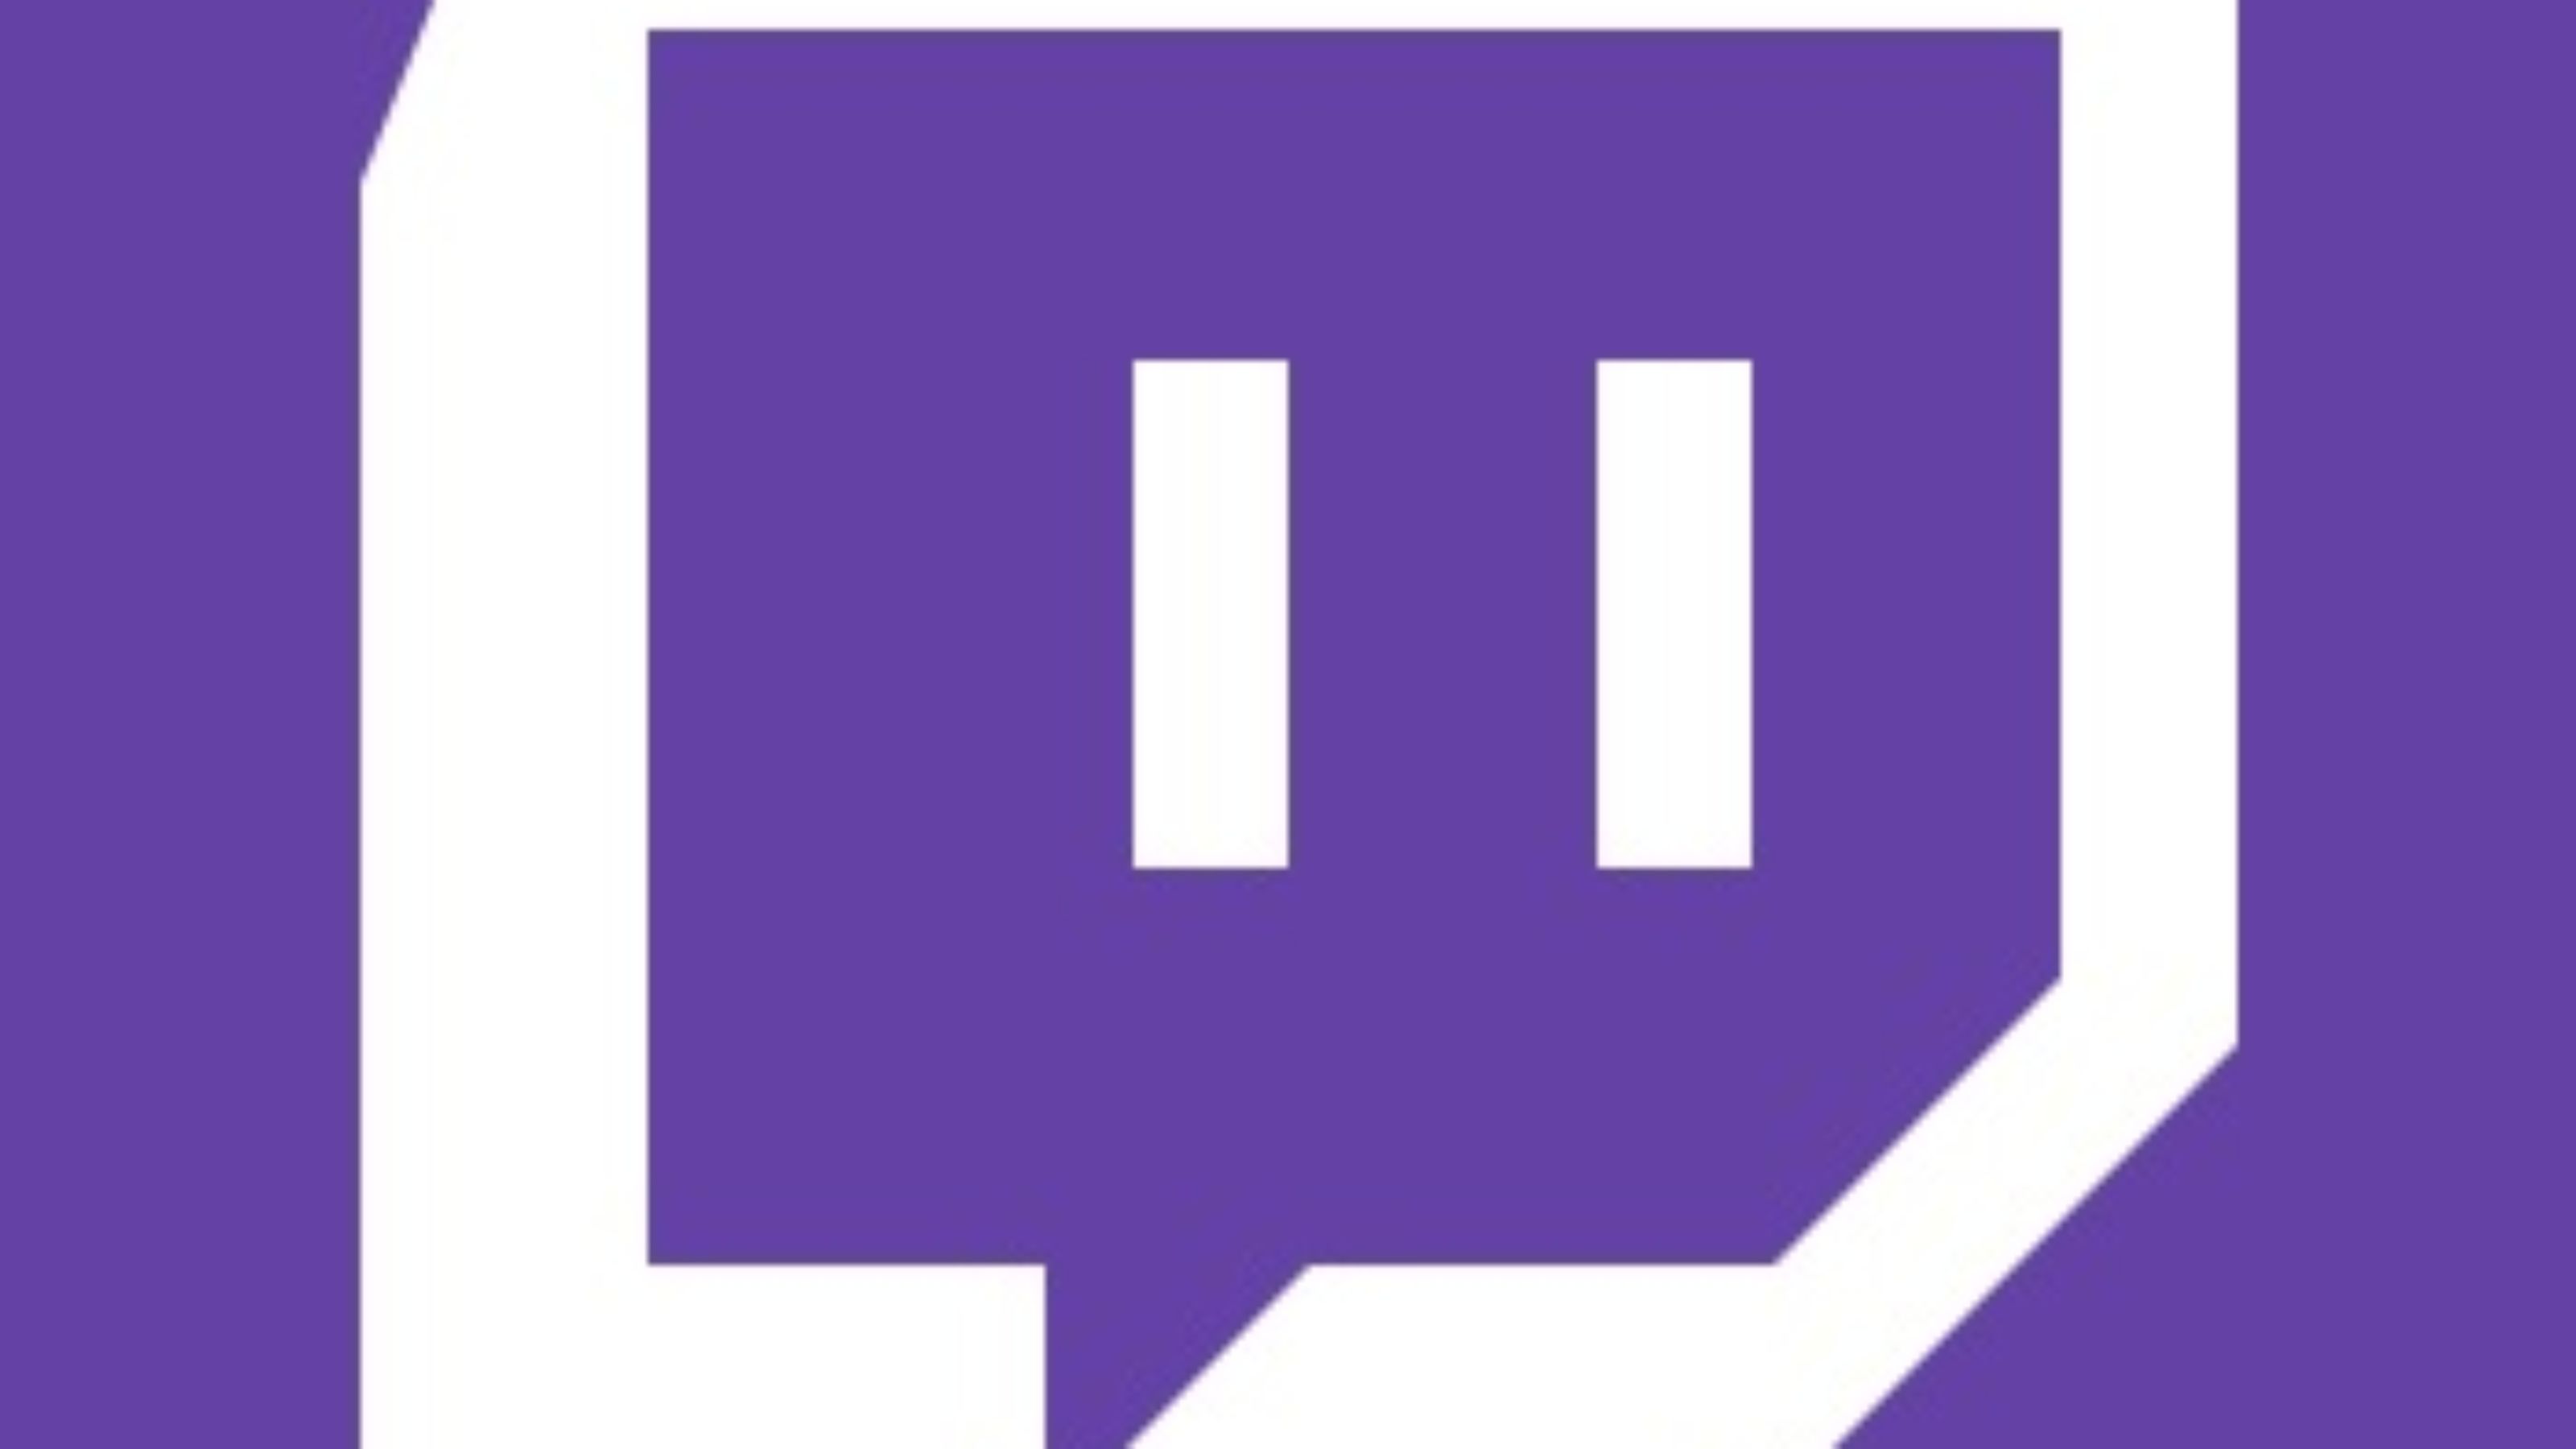 Twitch Logo Png - Free Transparent PNG Logos